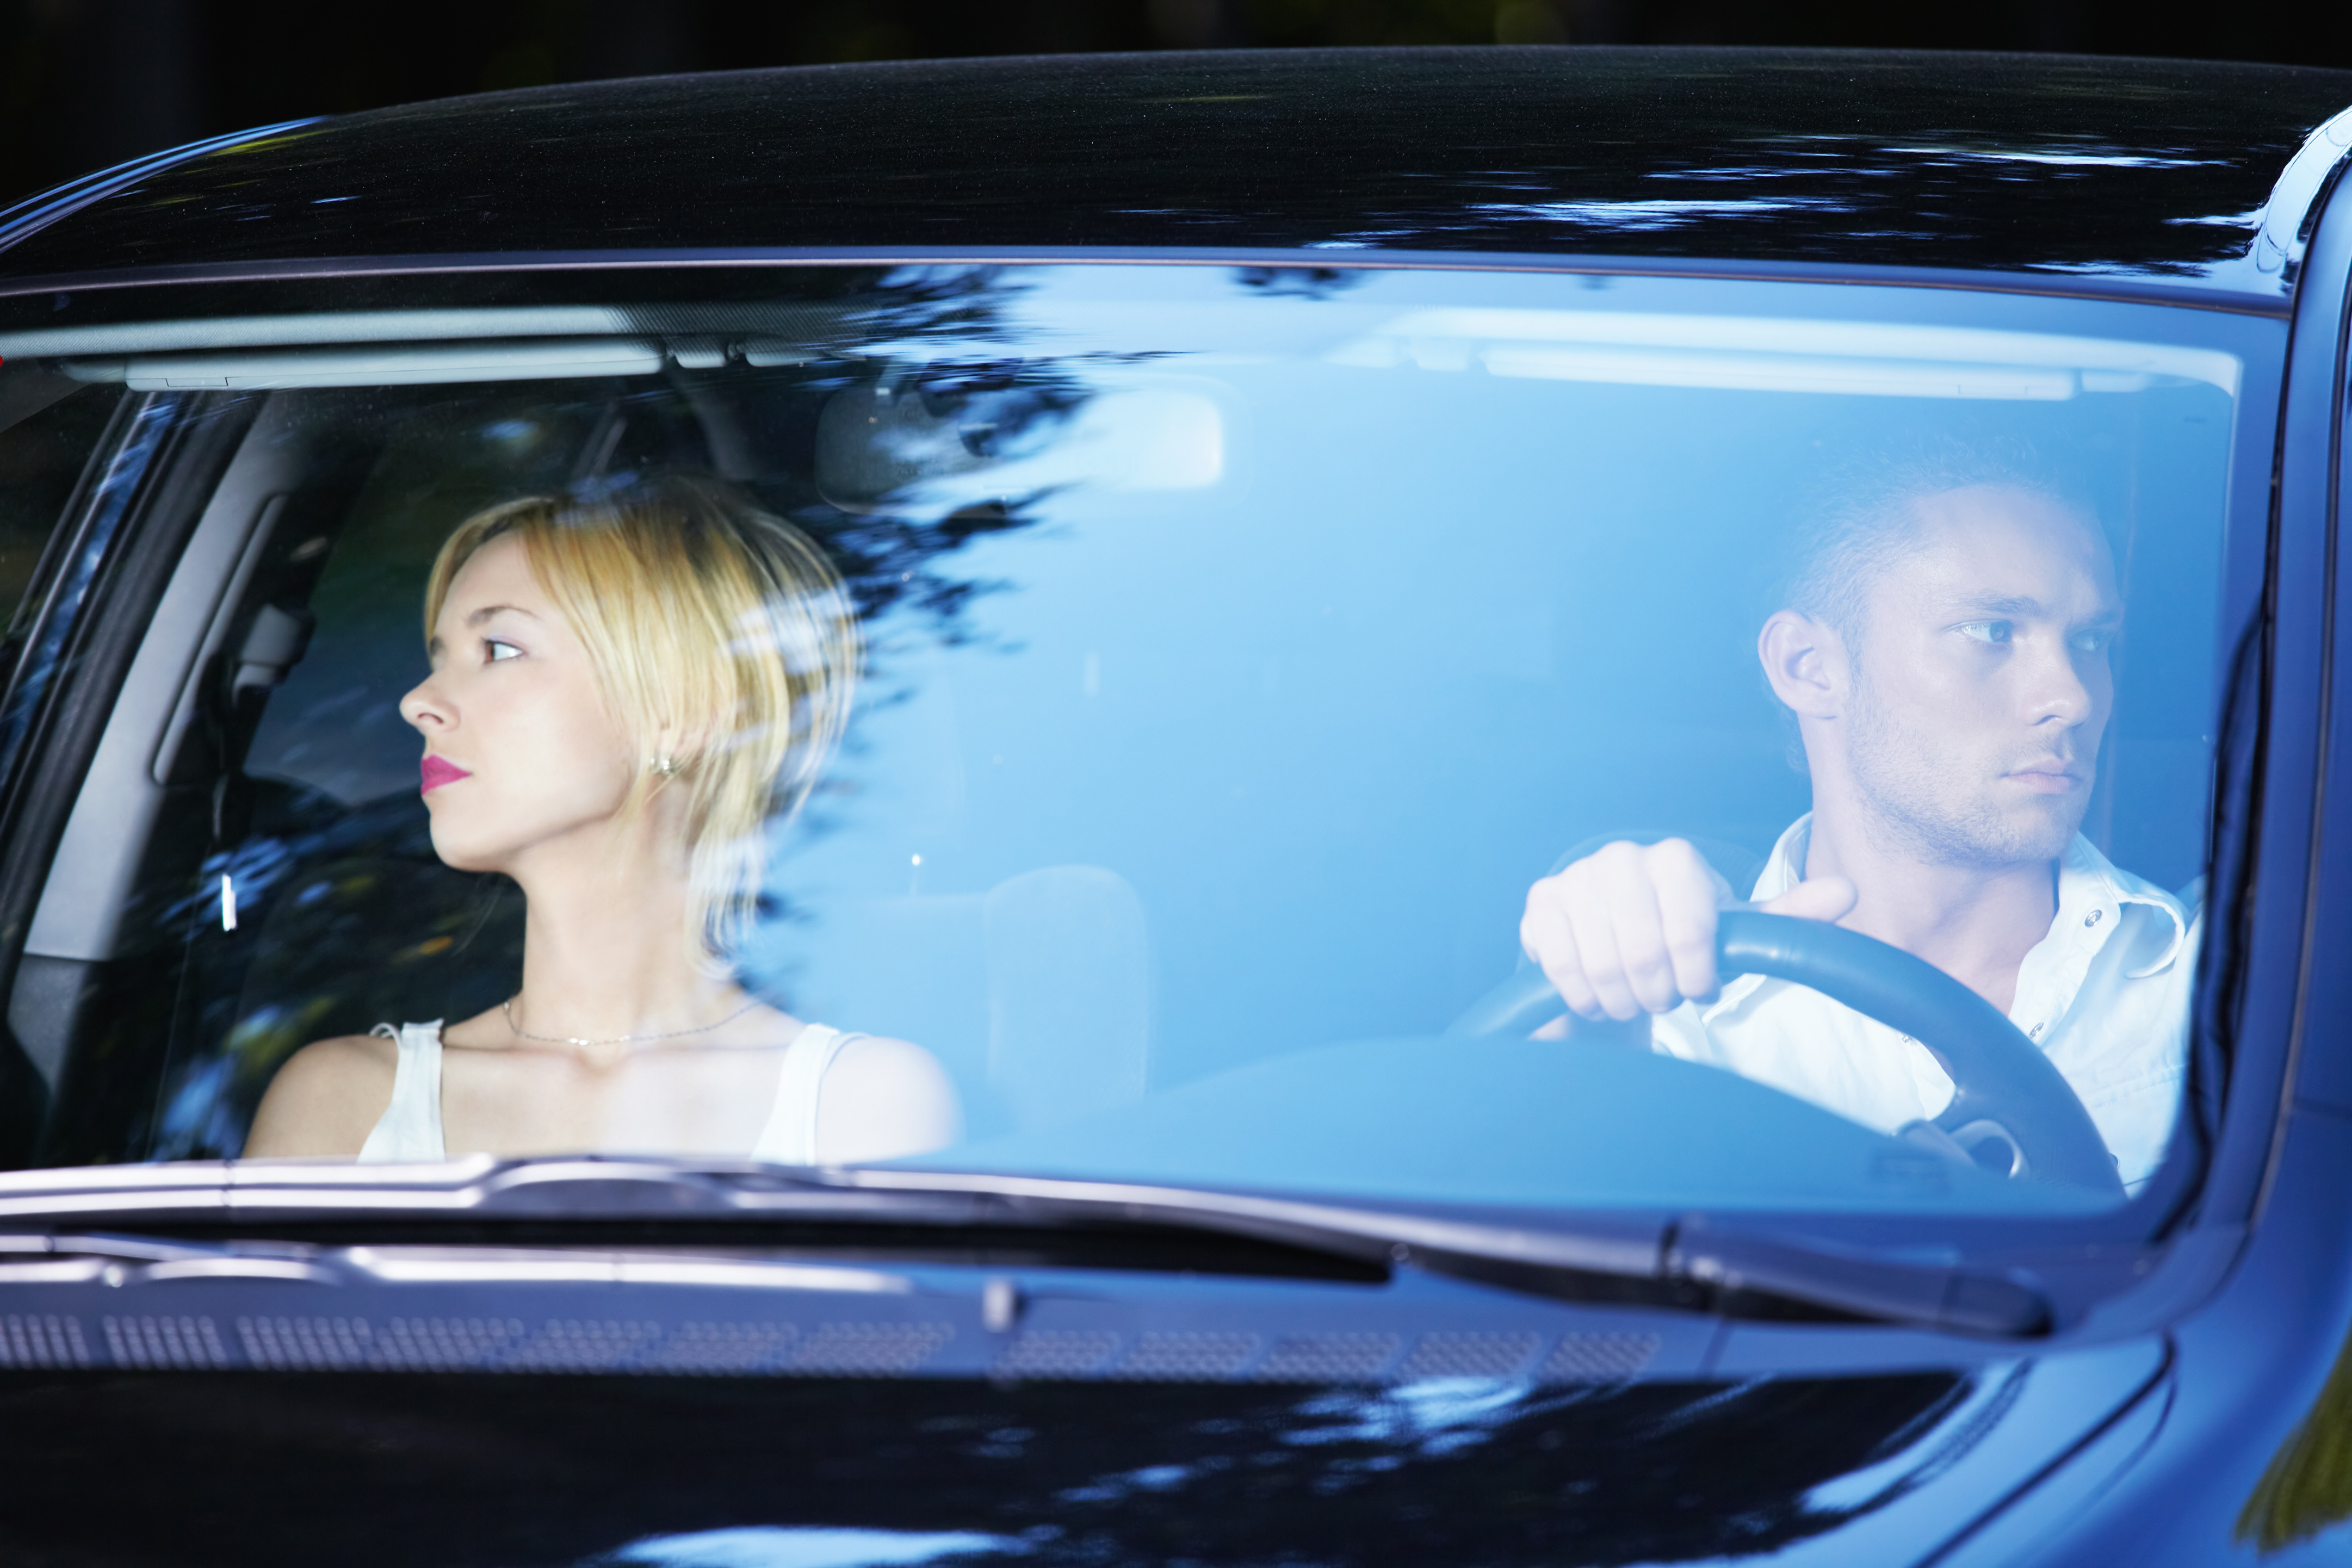 Couple in car | Source: Shutterstock